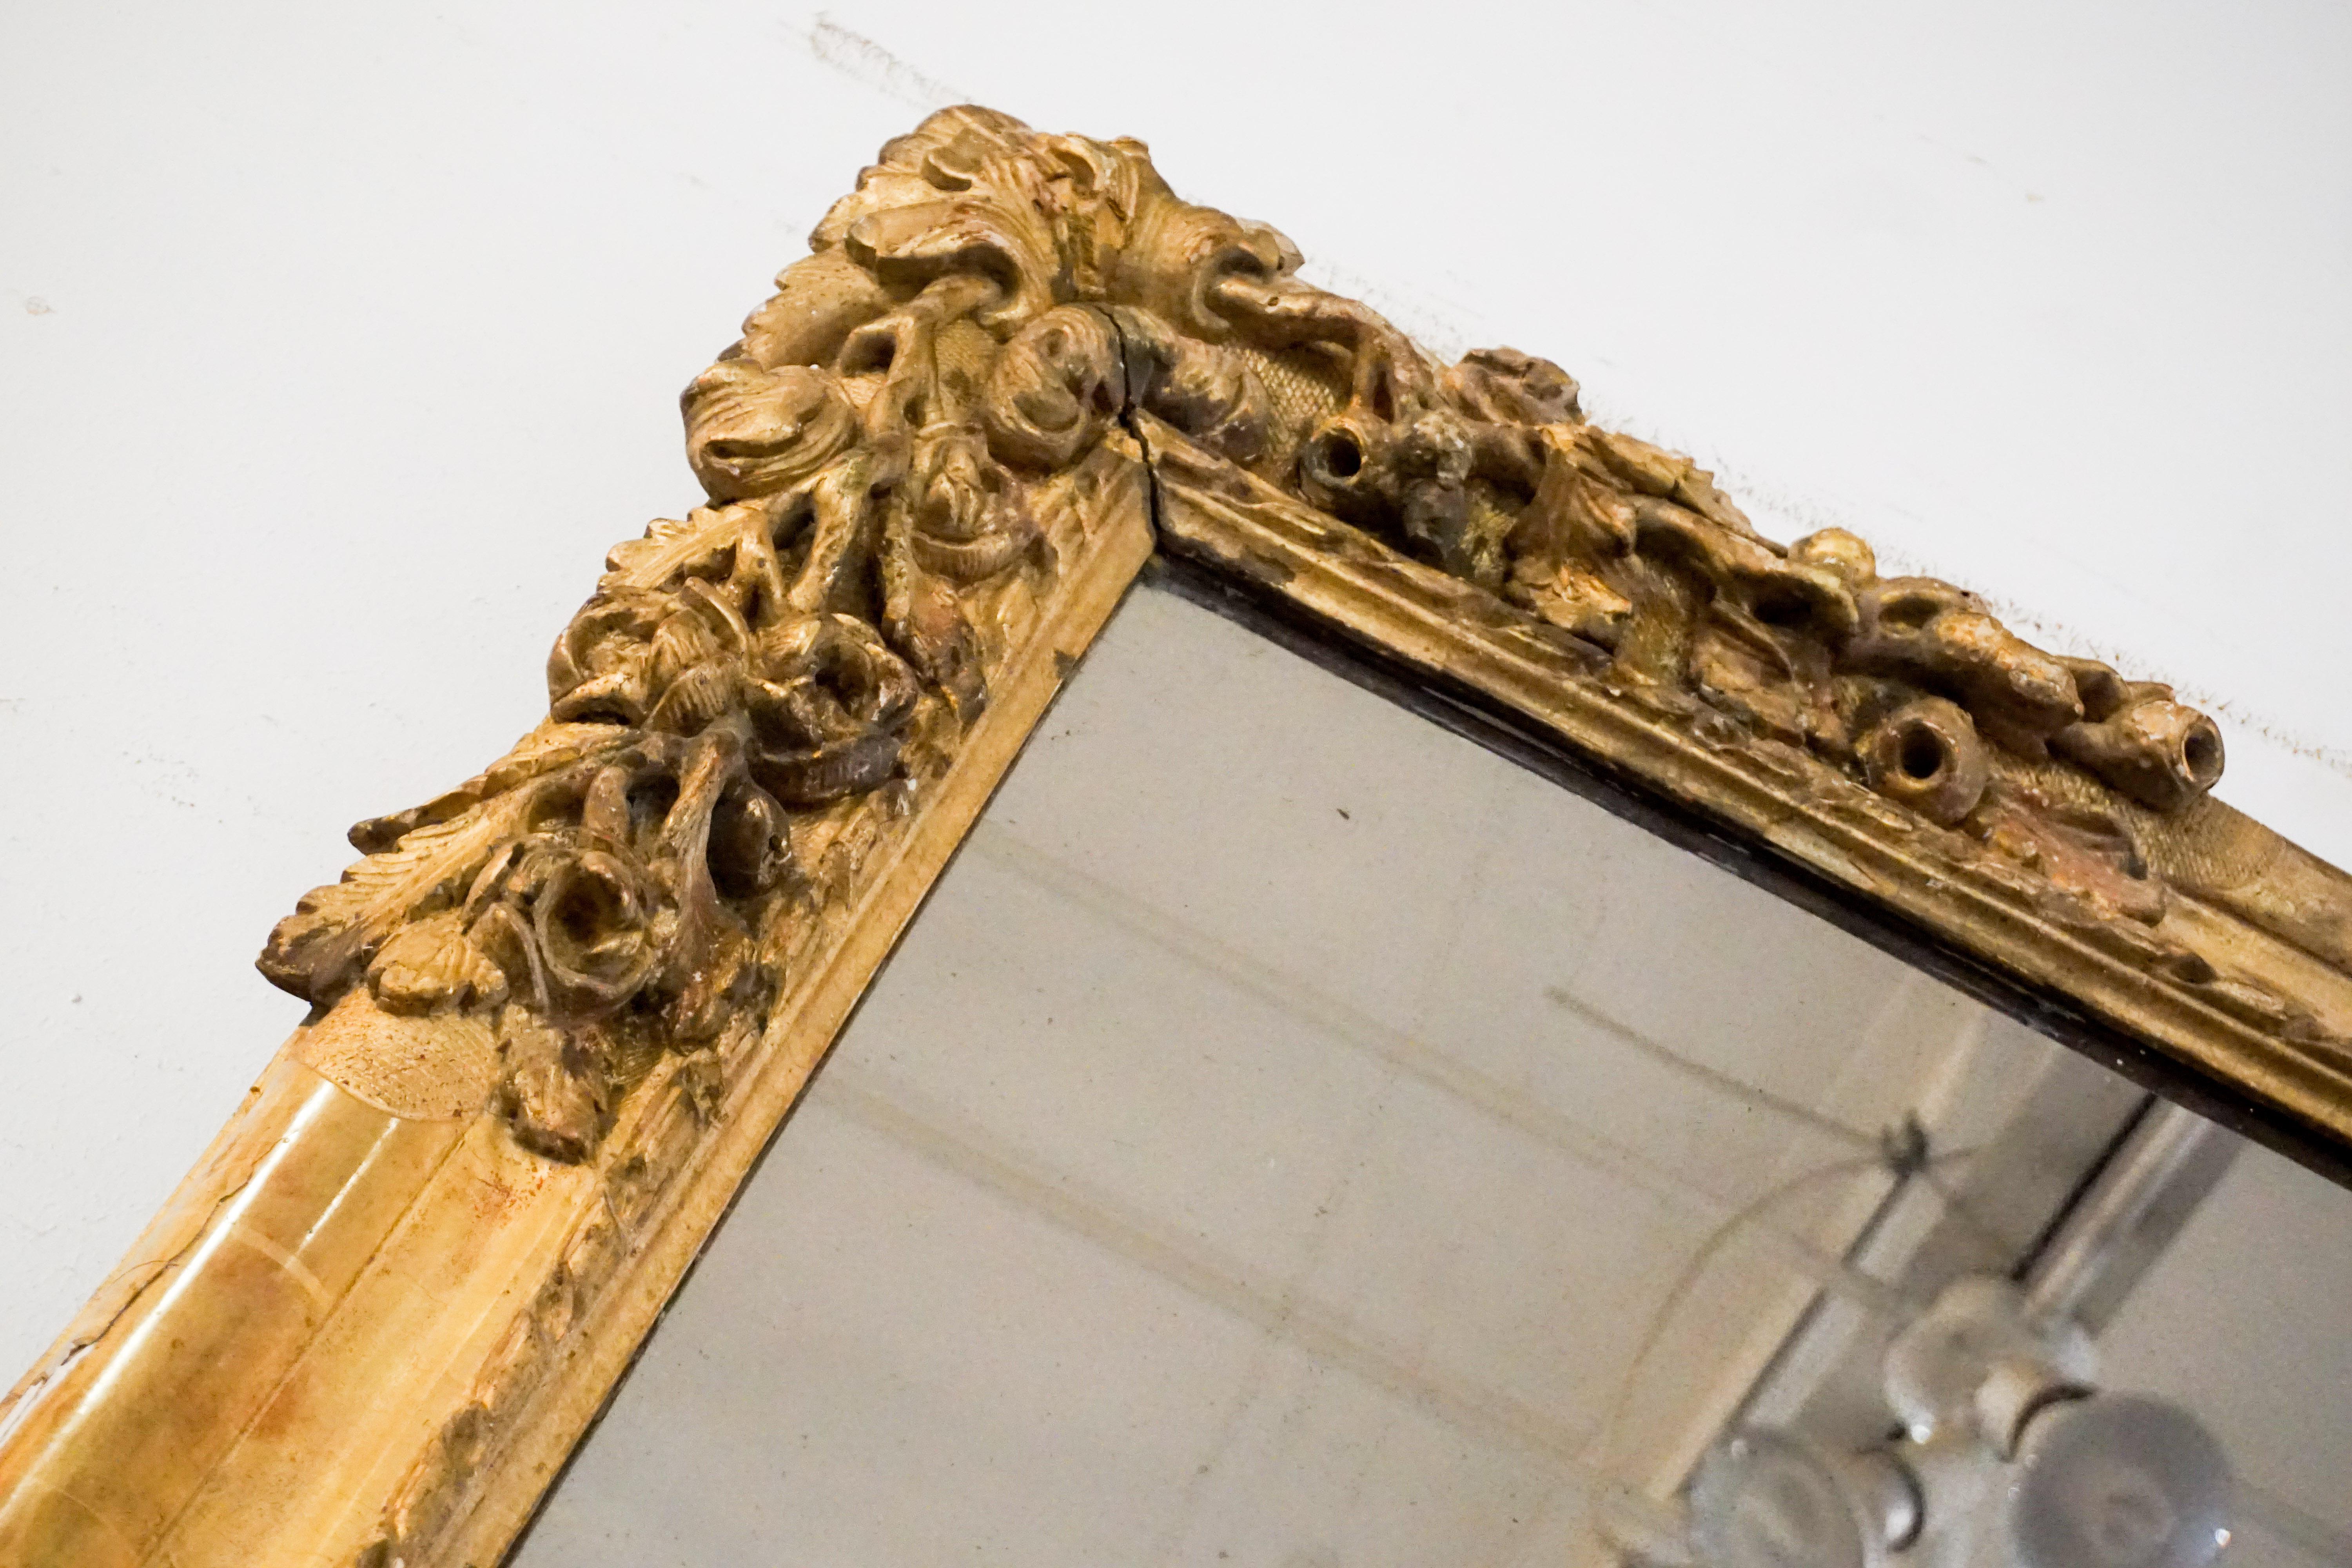 Antique gold leaf mirror.

Origin: France, circa 1780

Measurements: 48